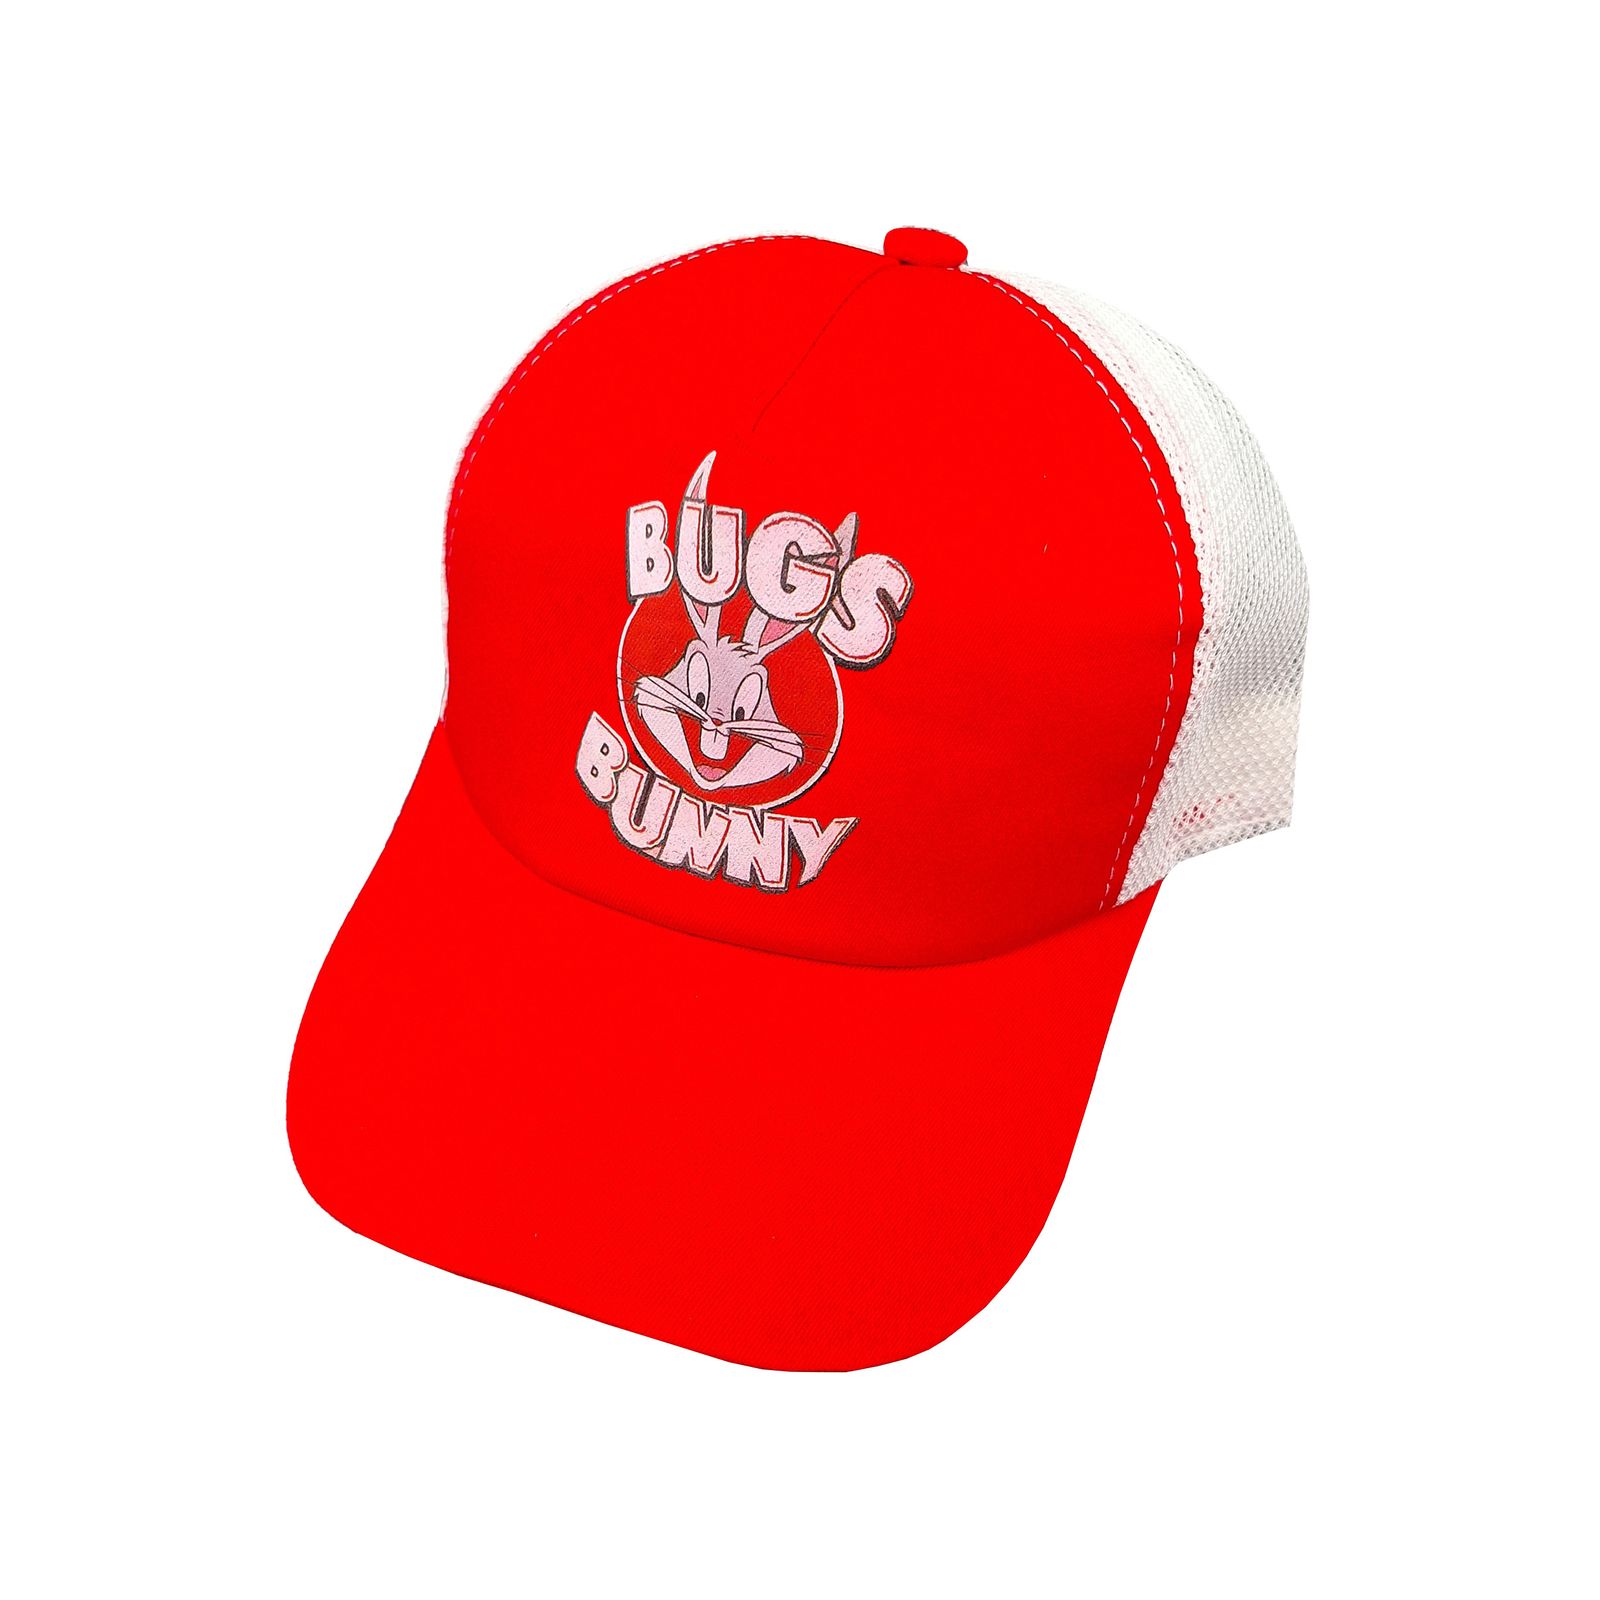 کلاه کپ بچگانه مدل BUGS کد 1217 رنگ قرمز -  - 3